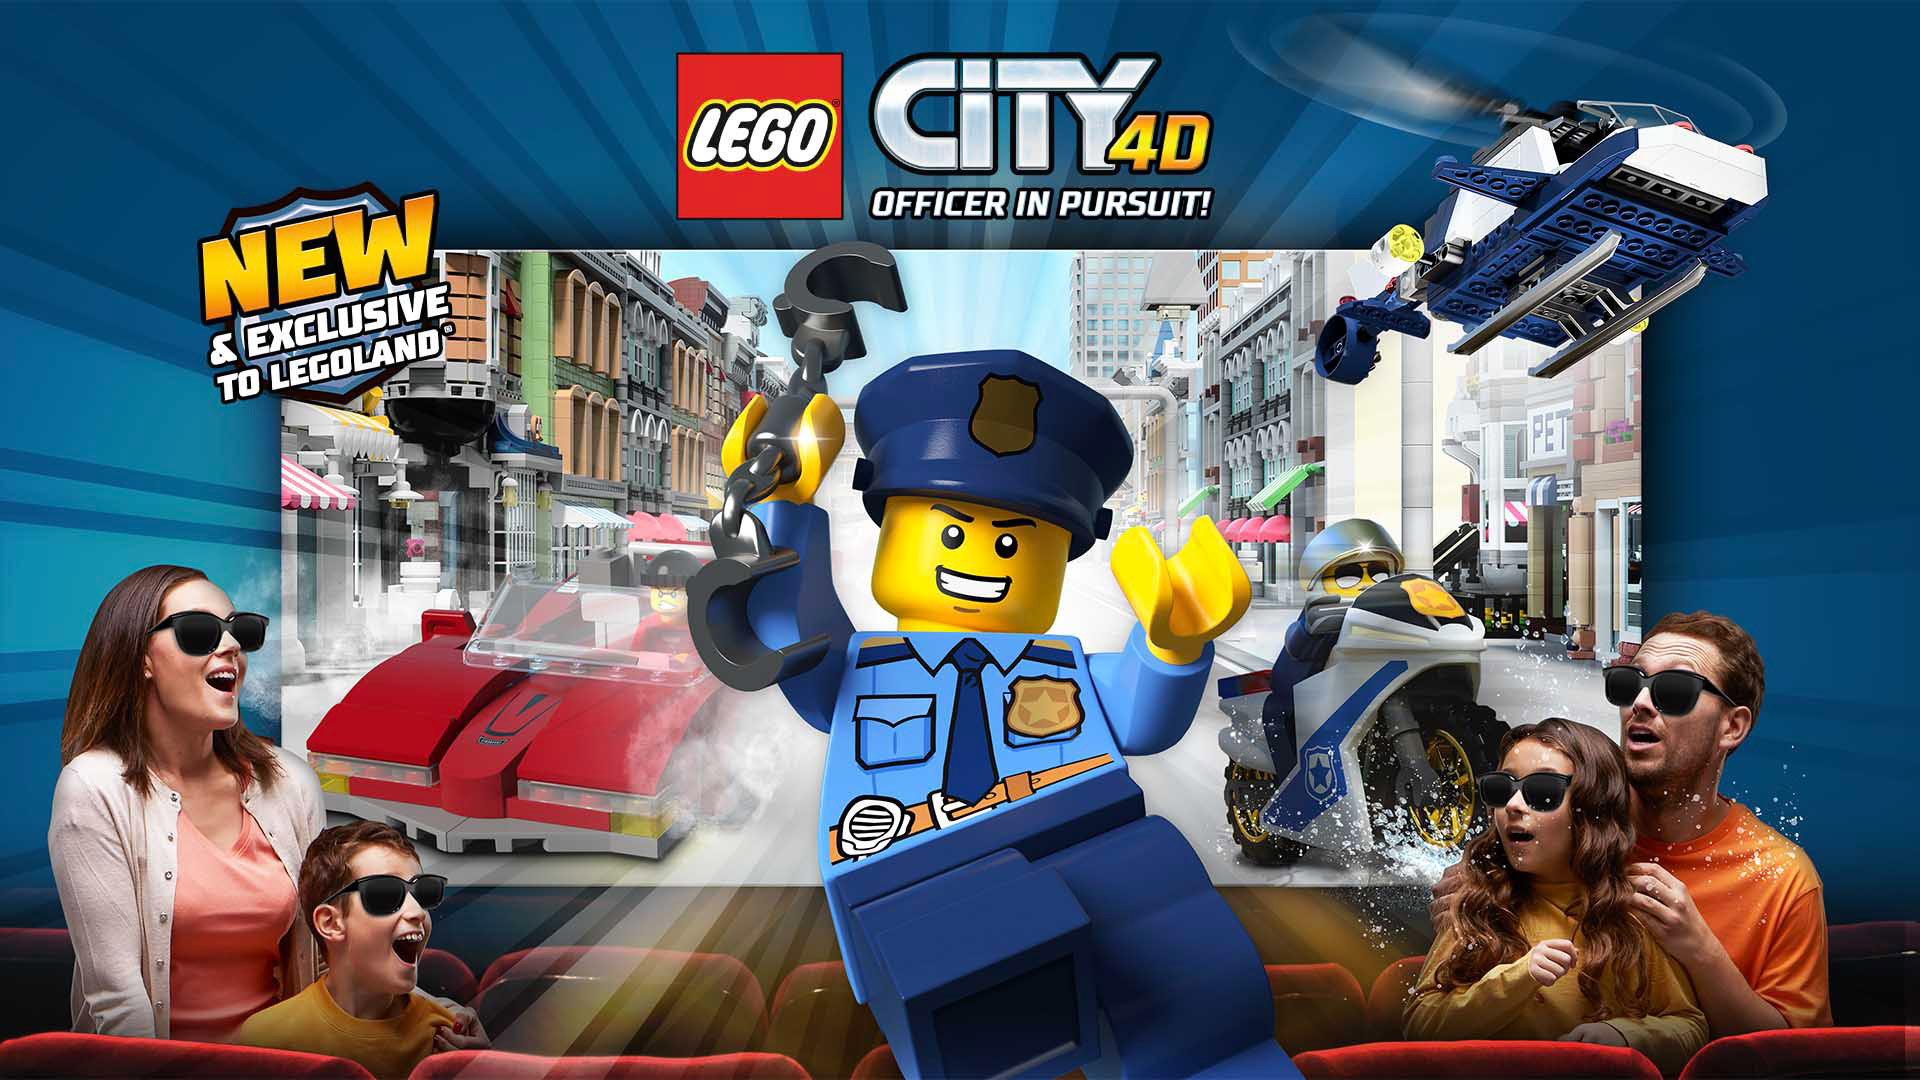 LEGO CITY 4D KV